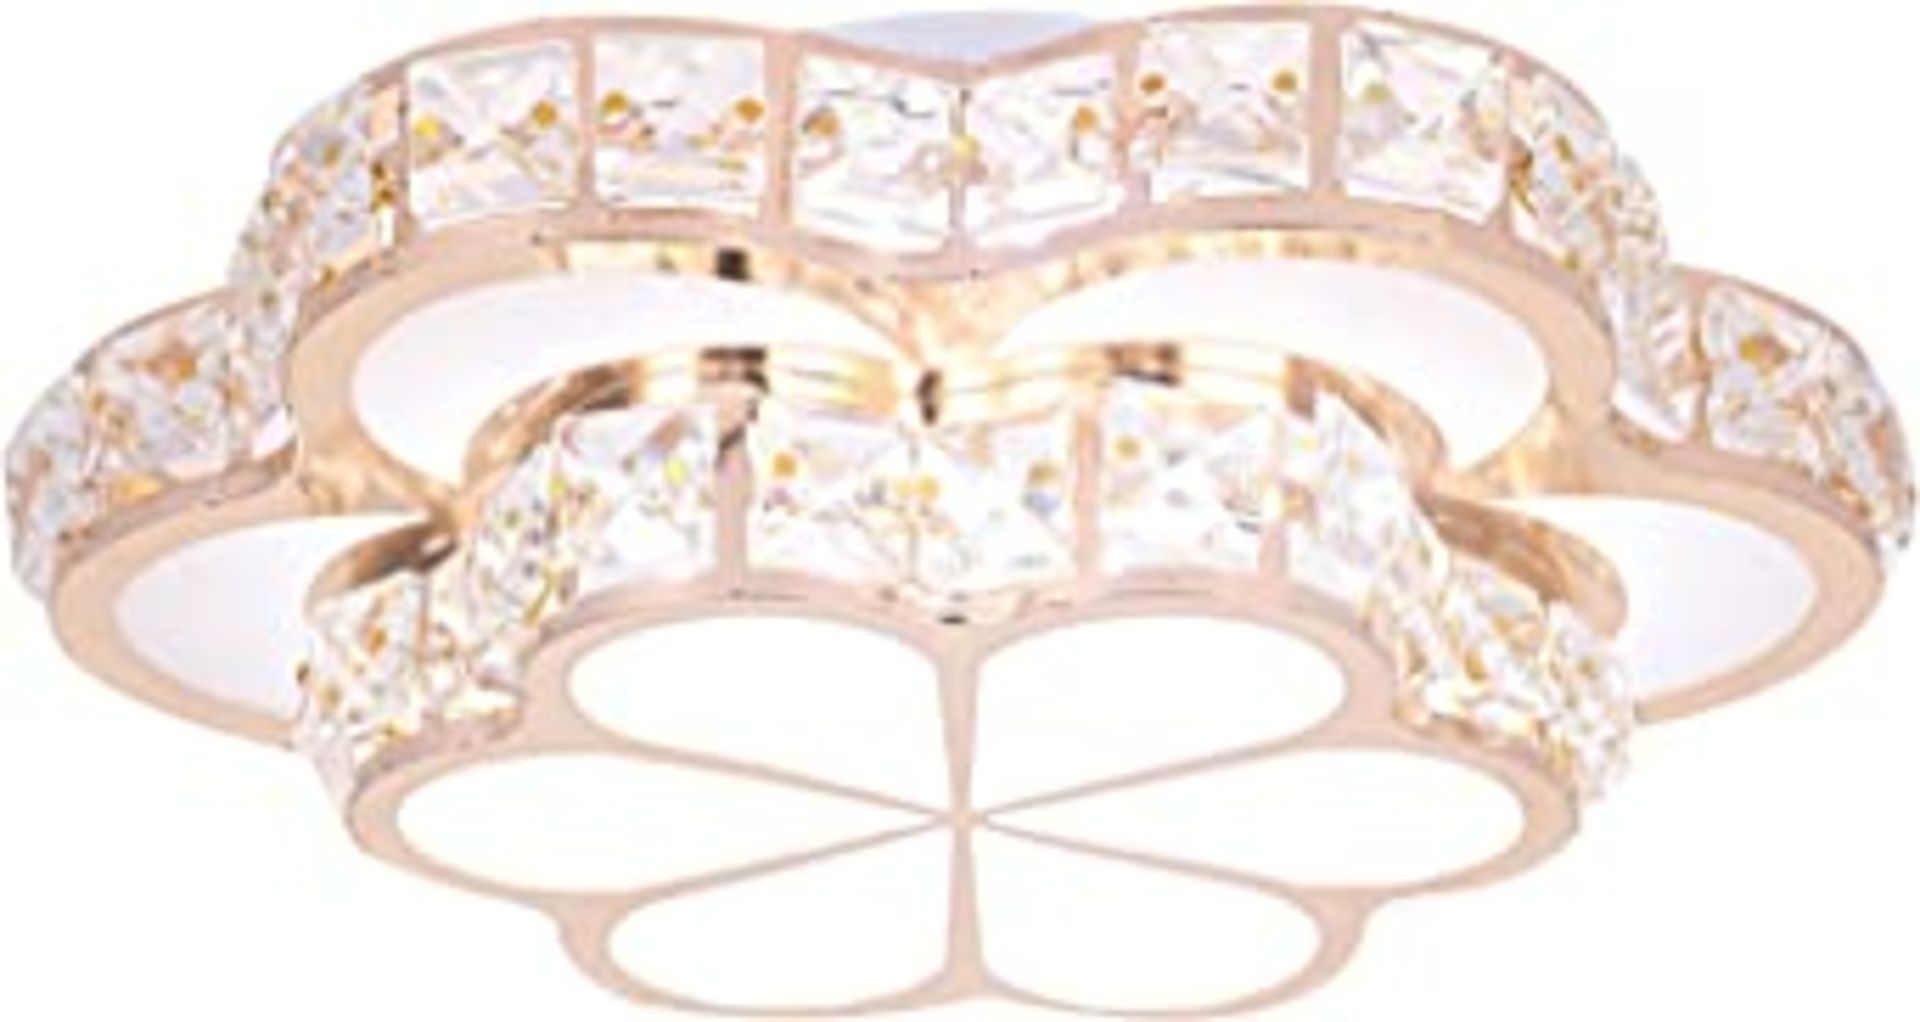 RRP-£26 GreeLustr Crystal Ceiling Light, Plum Blossom Modern Chandeliers, White Acrylic 3 Colors Adj